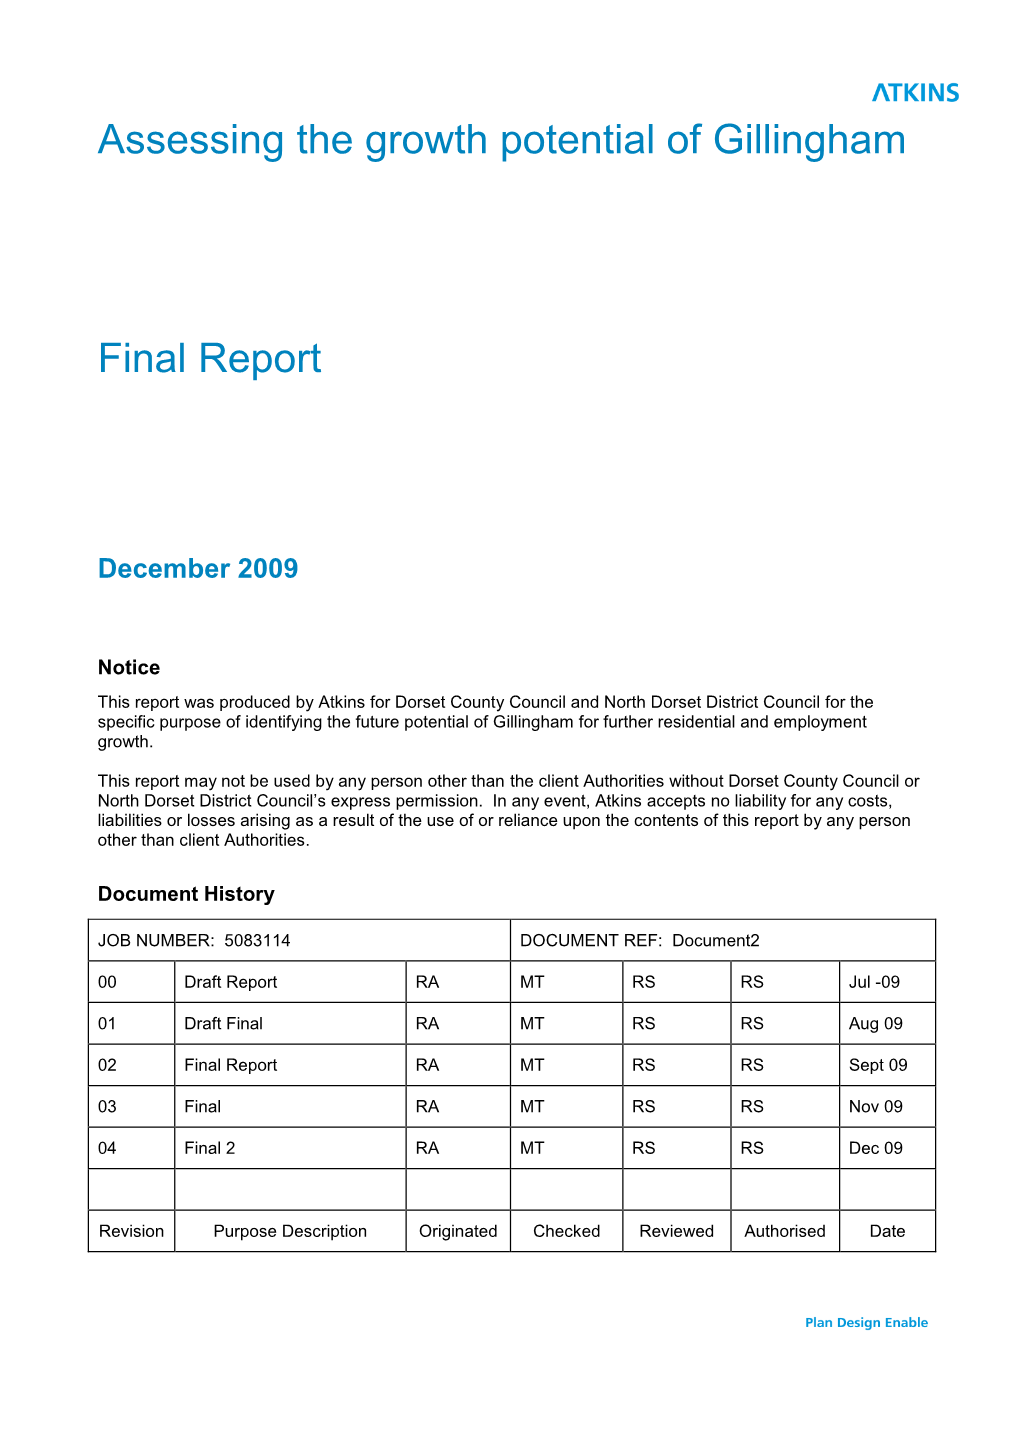 Gillingham Growth Study Final Report